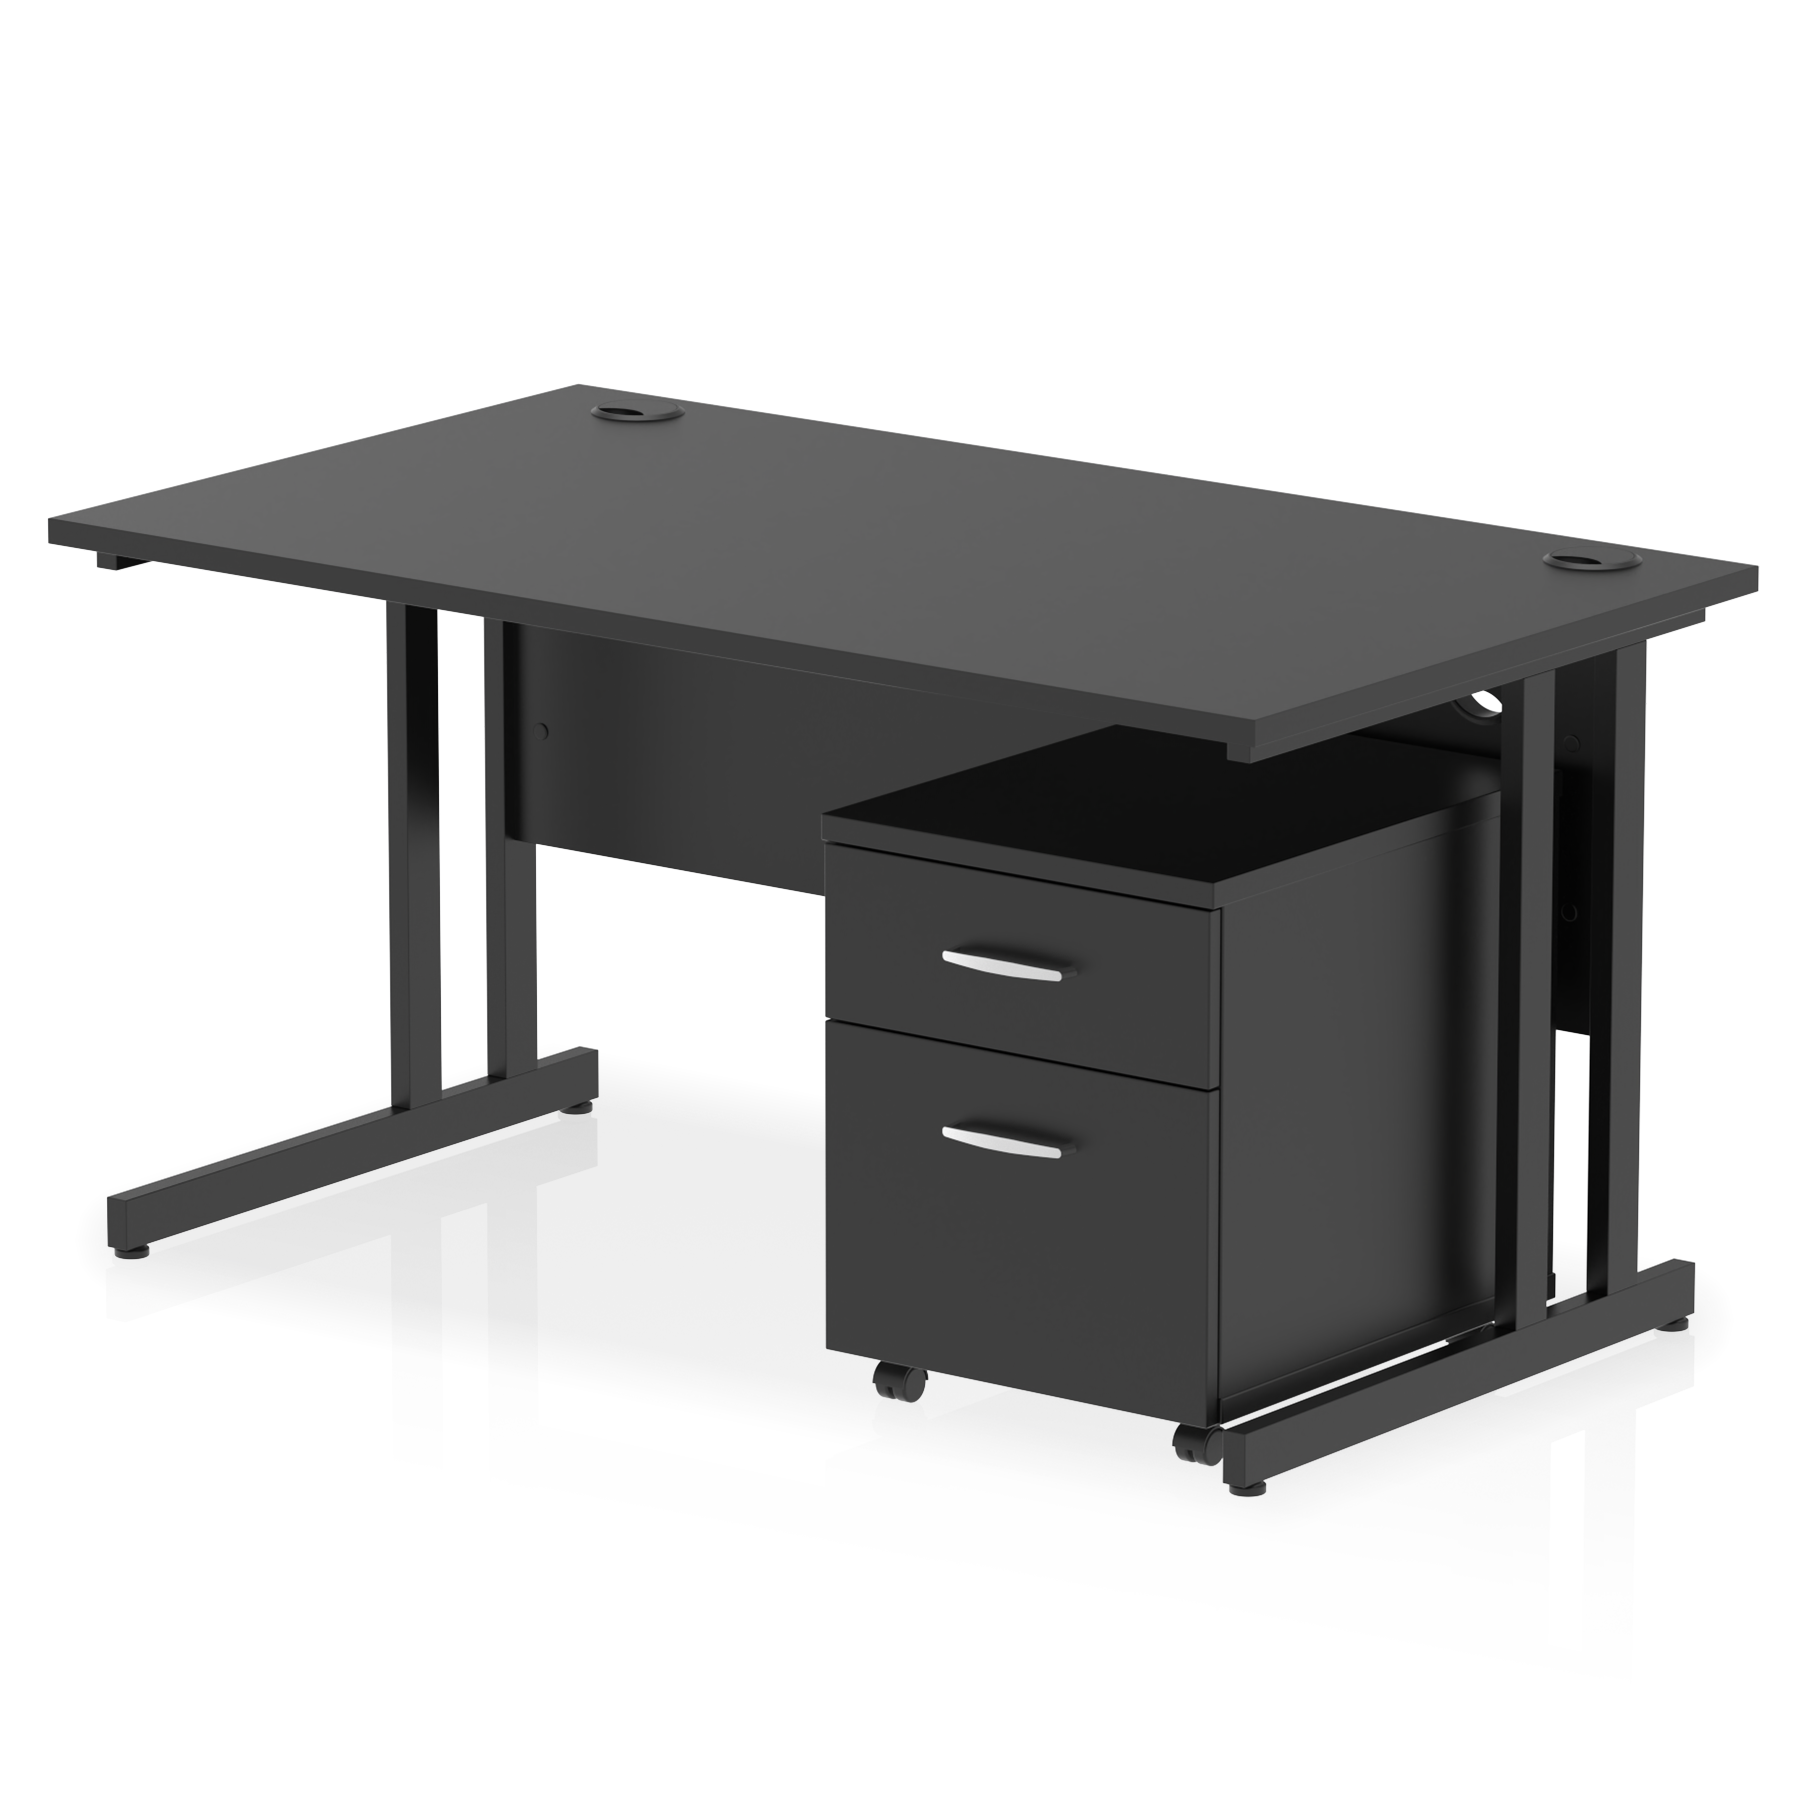 Impulse 1400mm Cantilever Straight Desk With Mobile Pedestal